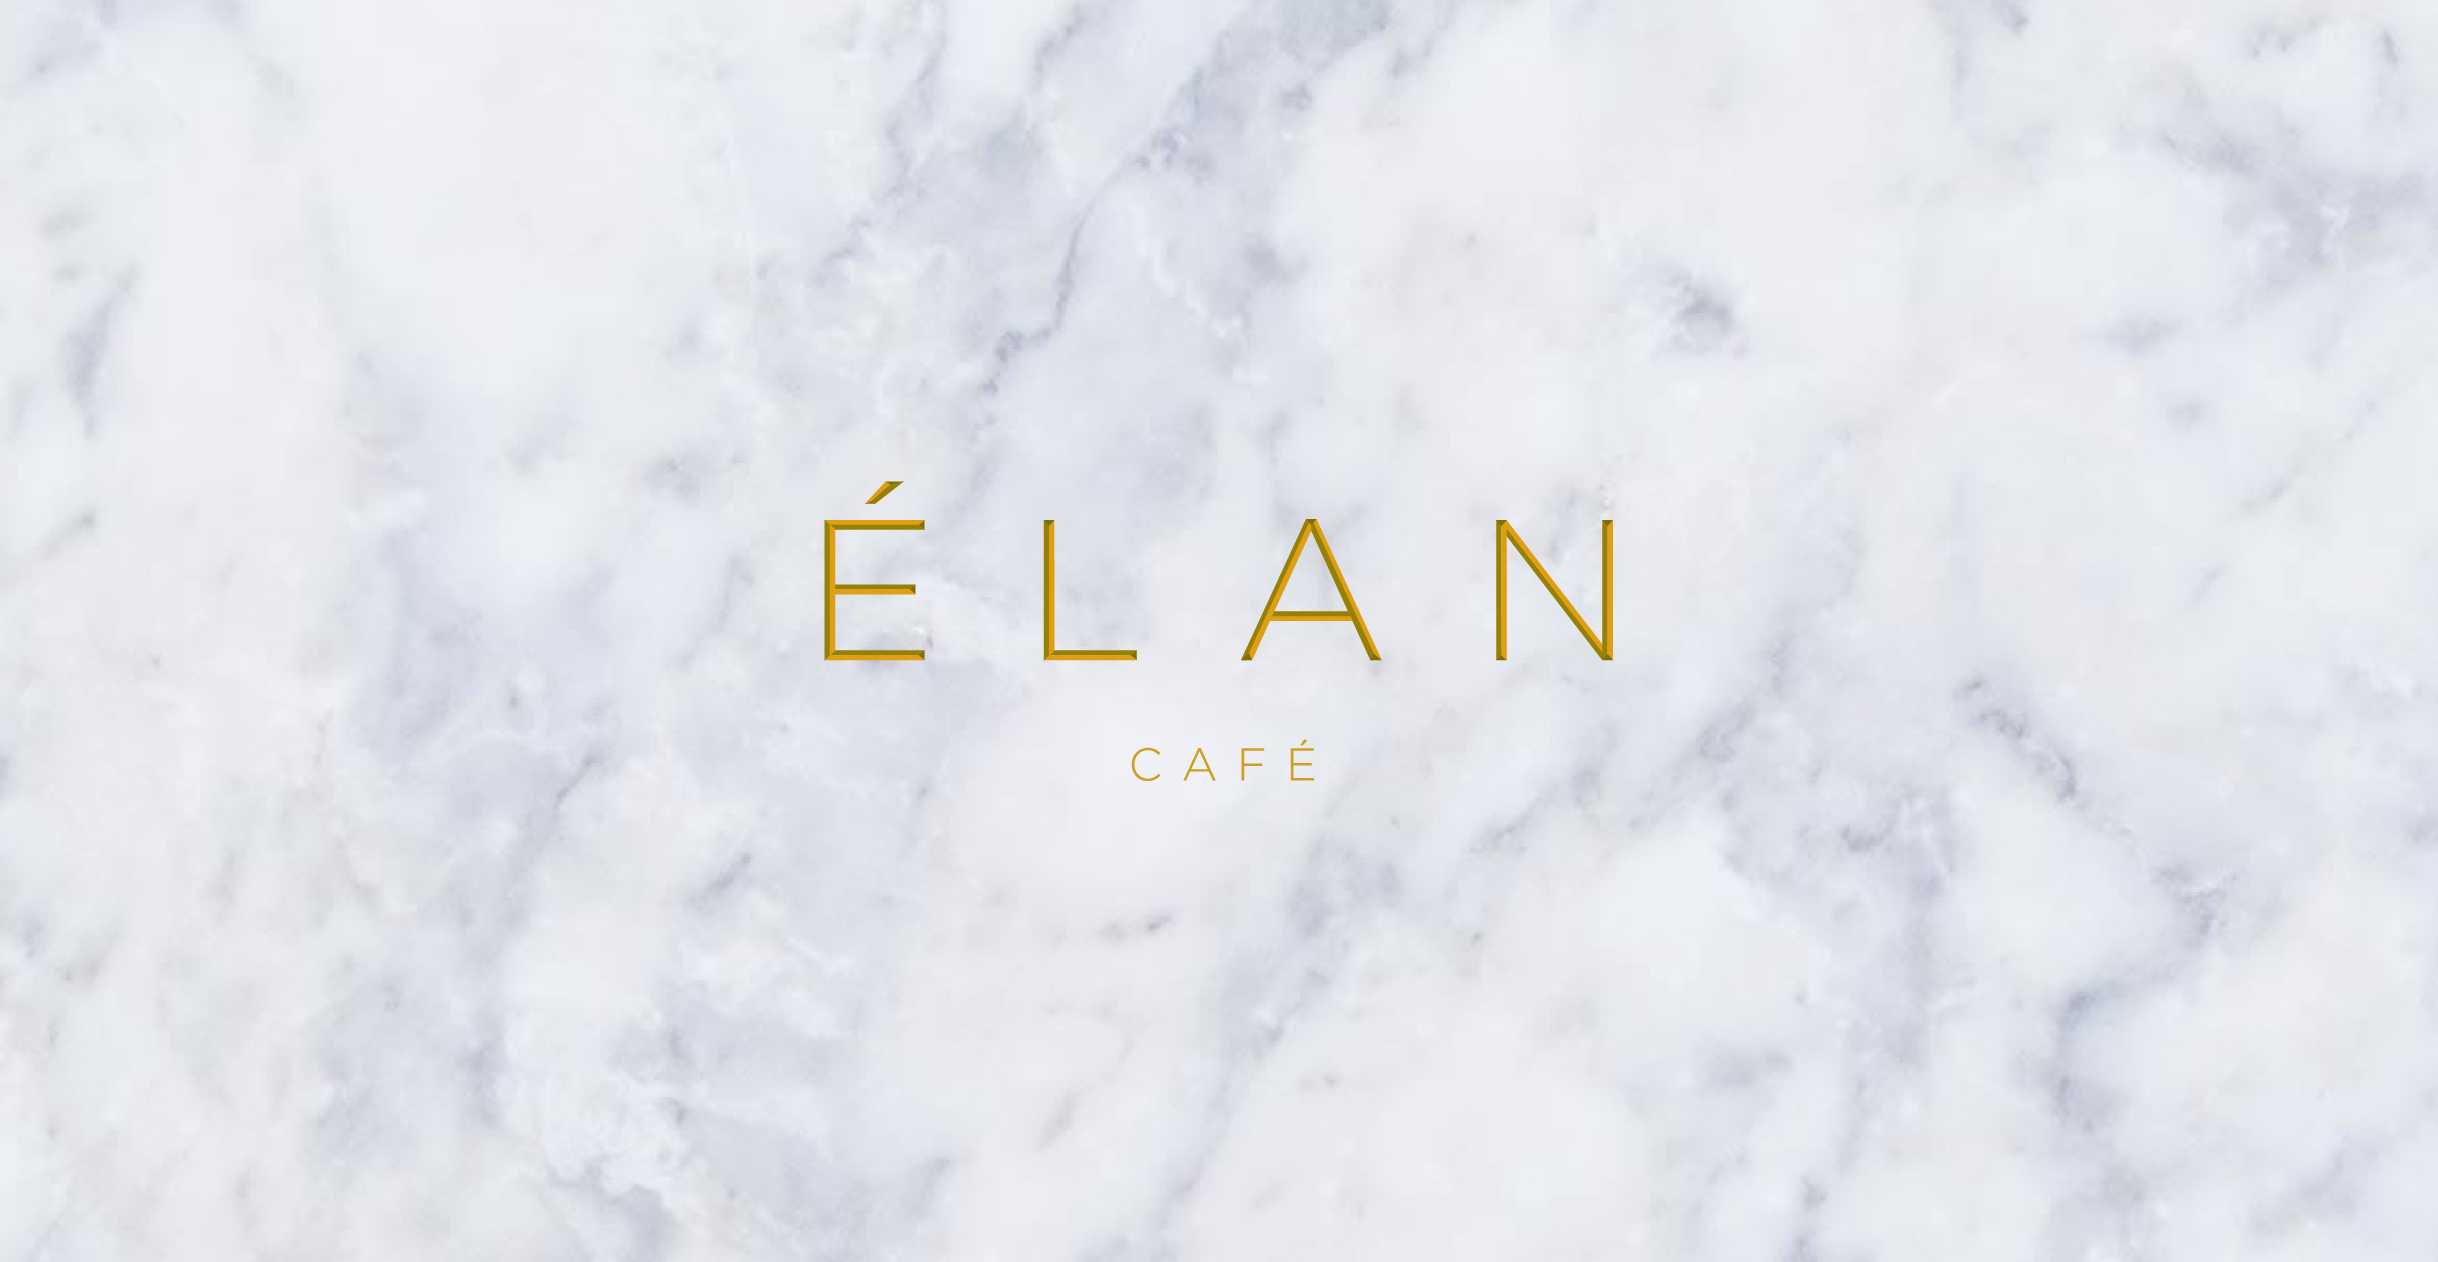 Elan Café logo on a marble background